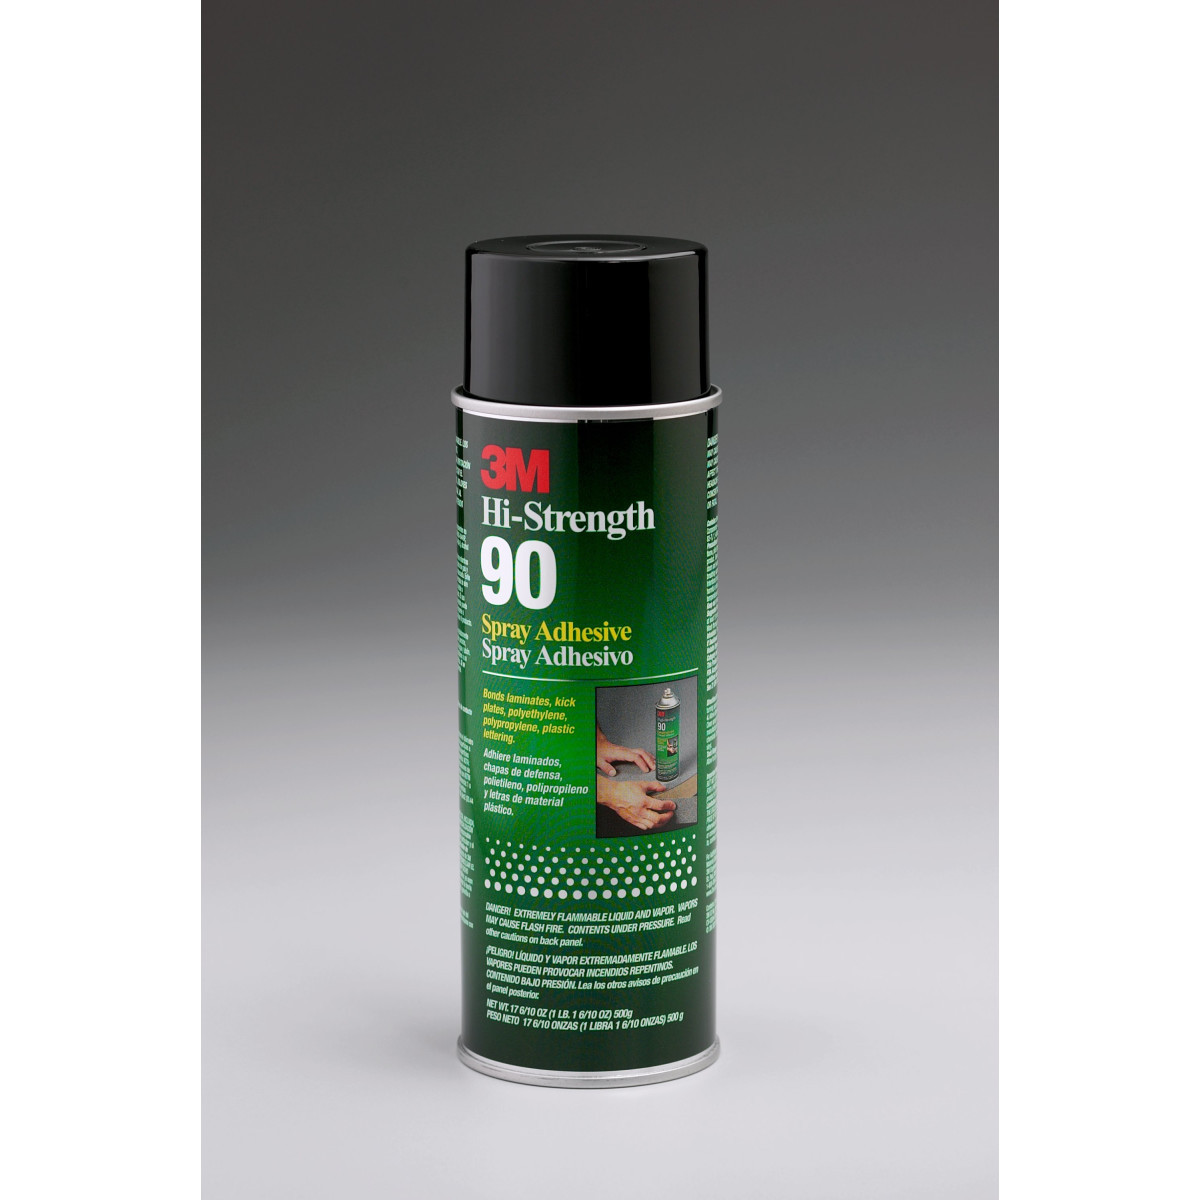 3M 7000028596 | 27 16 fl oz Transparent Spray Adhesive